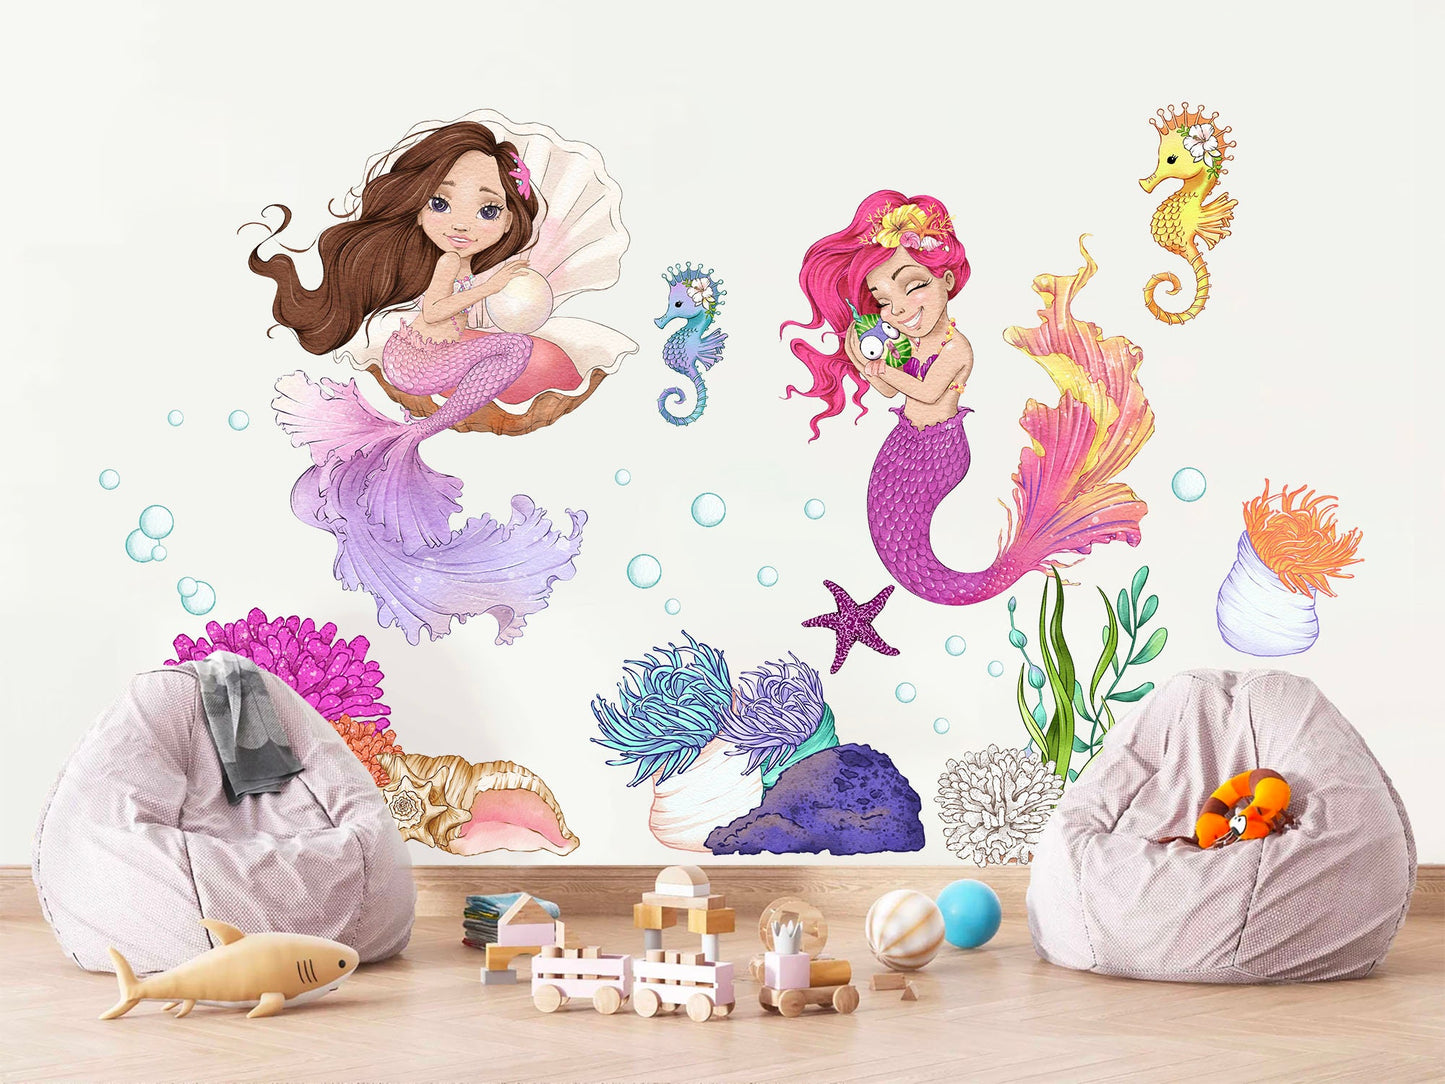 Whimsical Undersea Mermaid Princess Wall Art - Charming Mermaid, Seahorses & Ocean Life - Enhance Your Girl's Room Decor - BR189